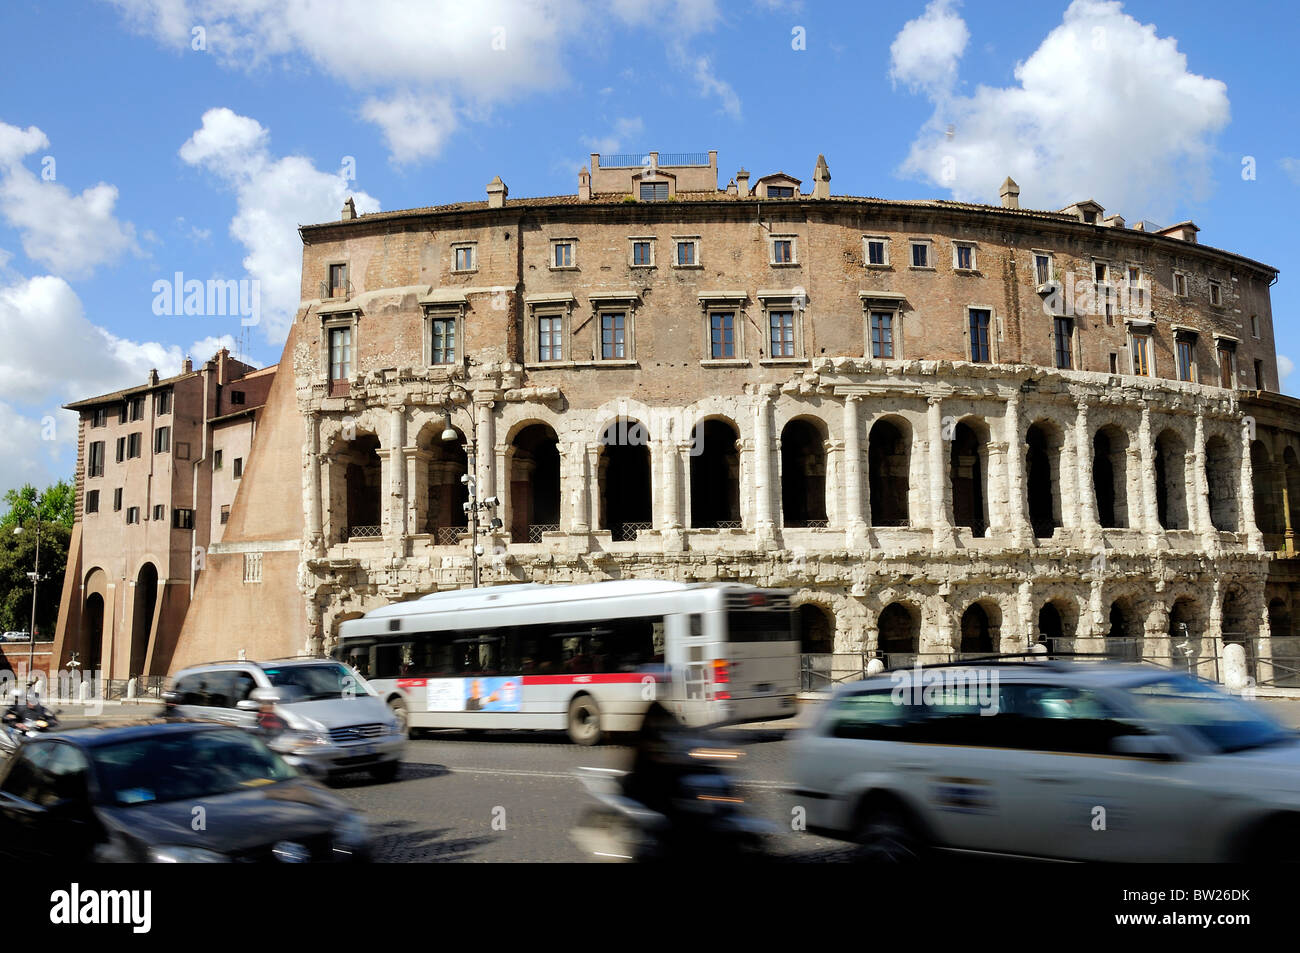 Teatro di Marcello with traffic passing Stock Photo